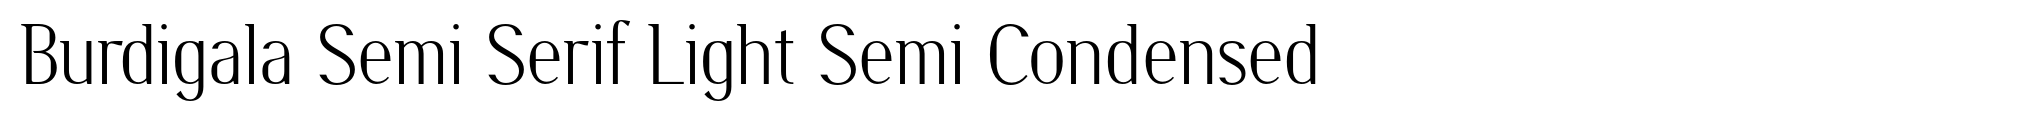 Burdigala Semi Serif Light Semi Condensed image